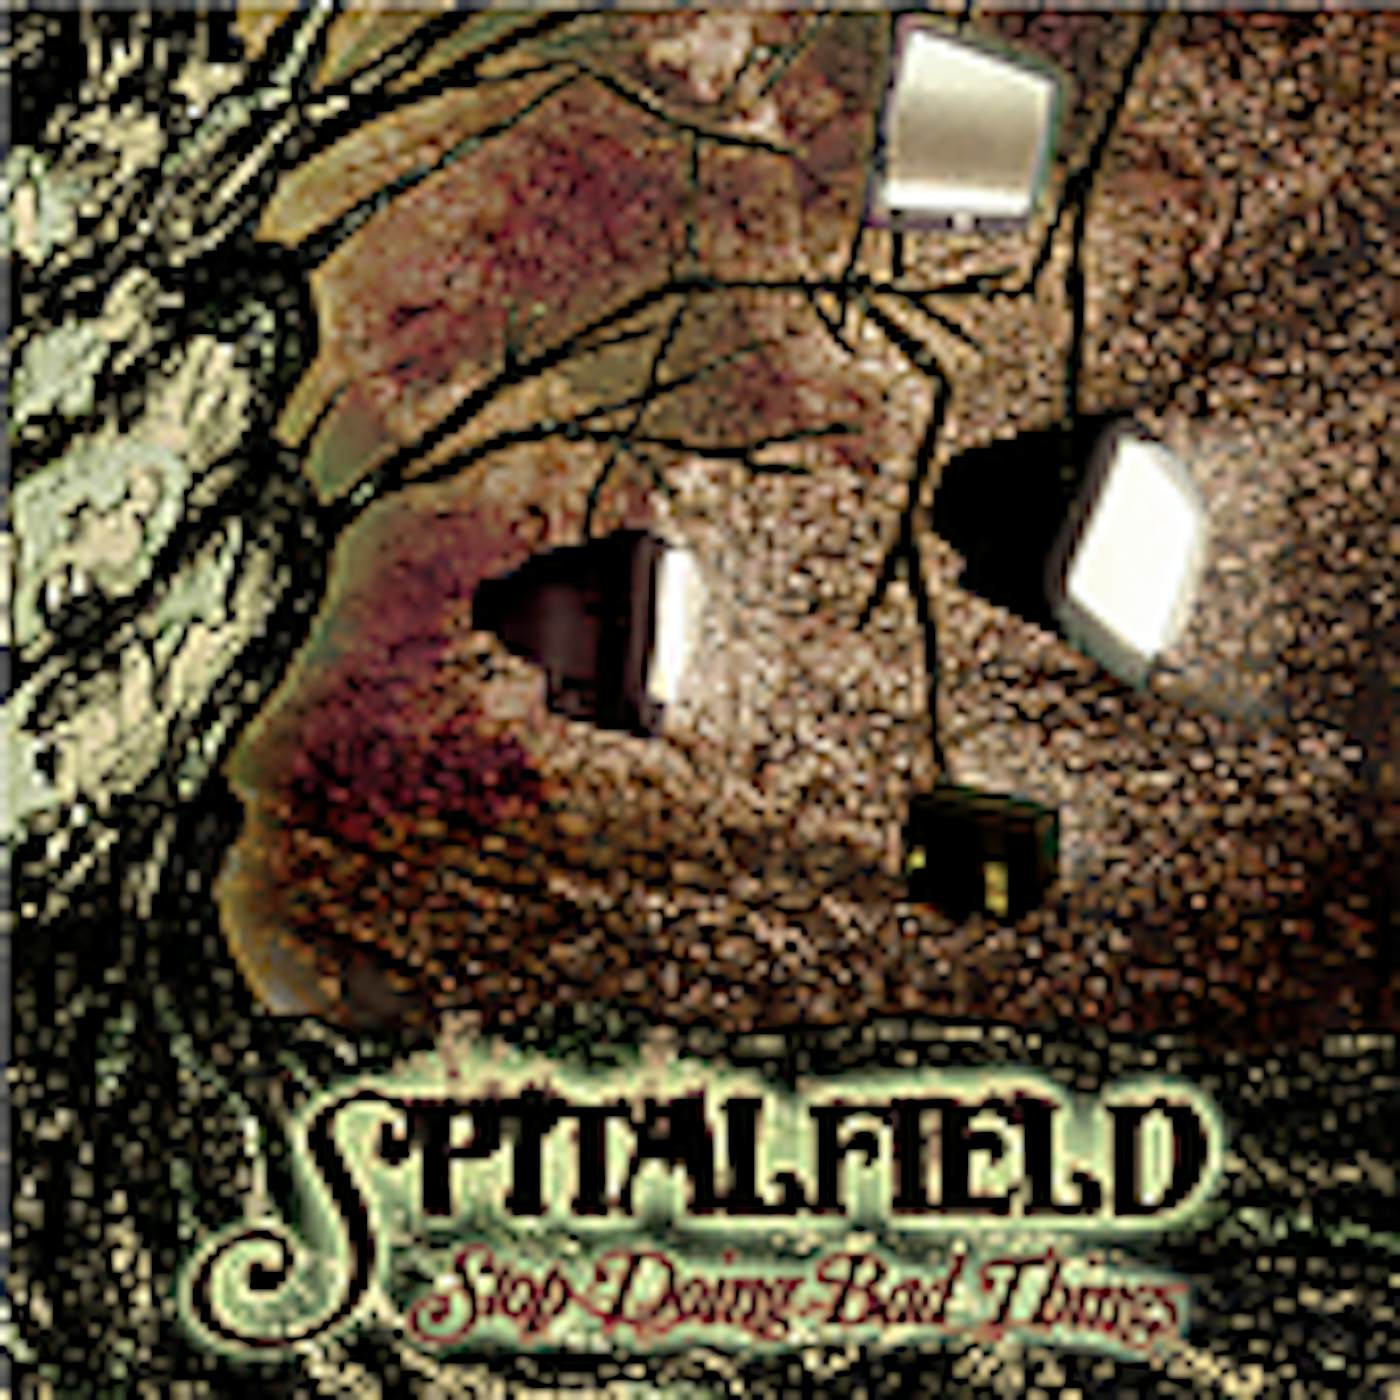 Spitalfield STOP DOING BAD THINGS CD